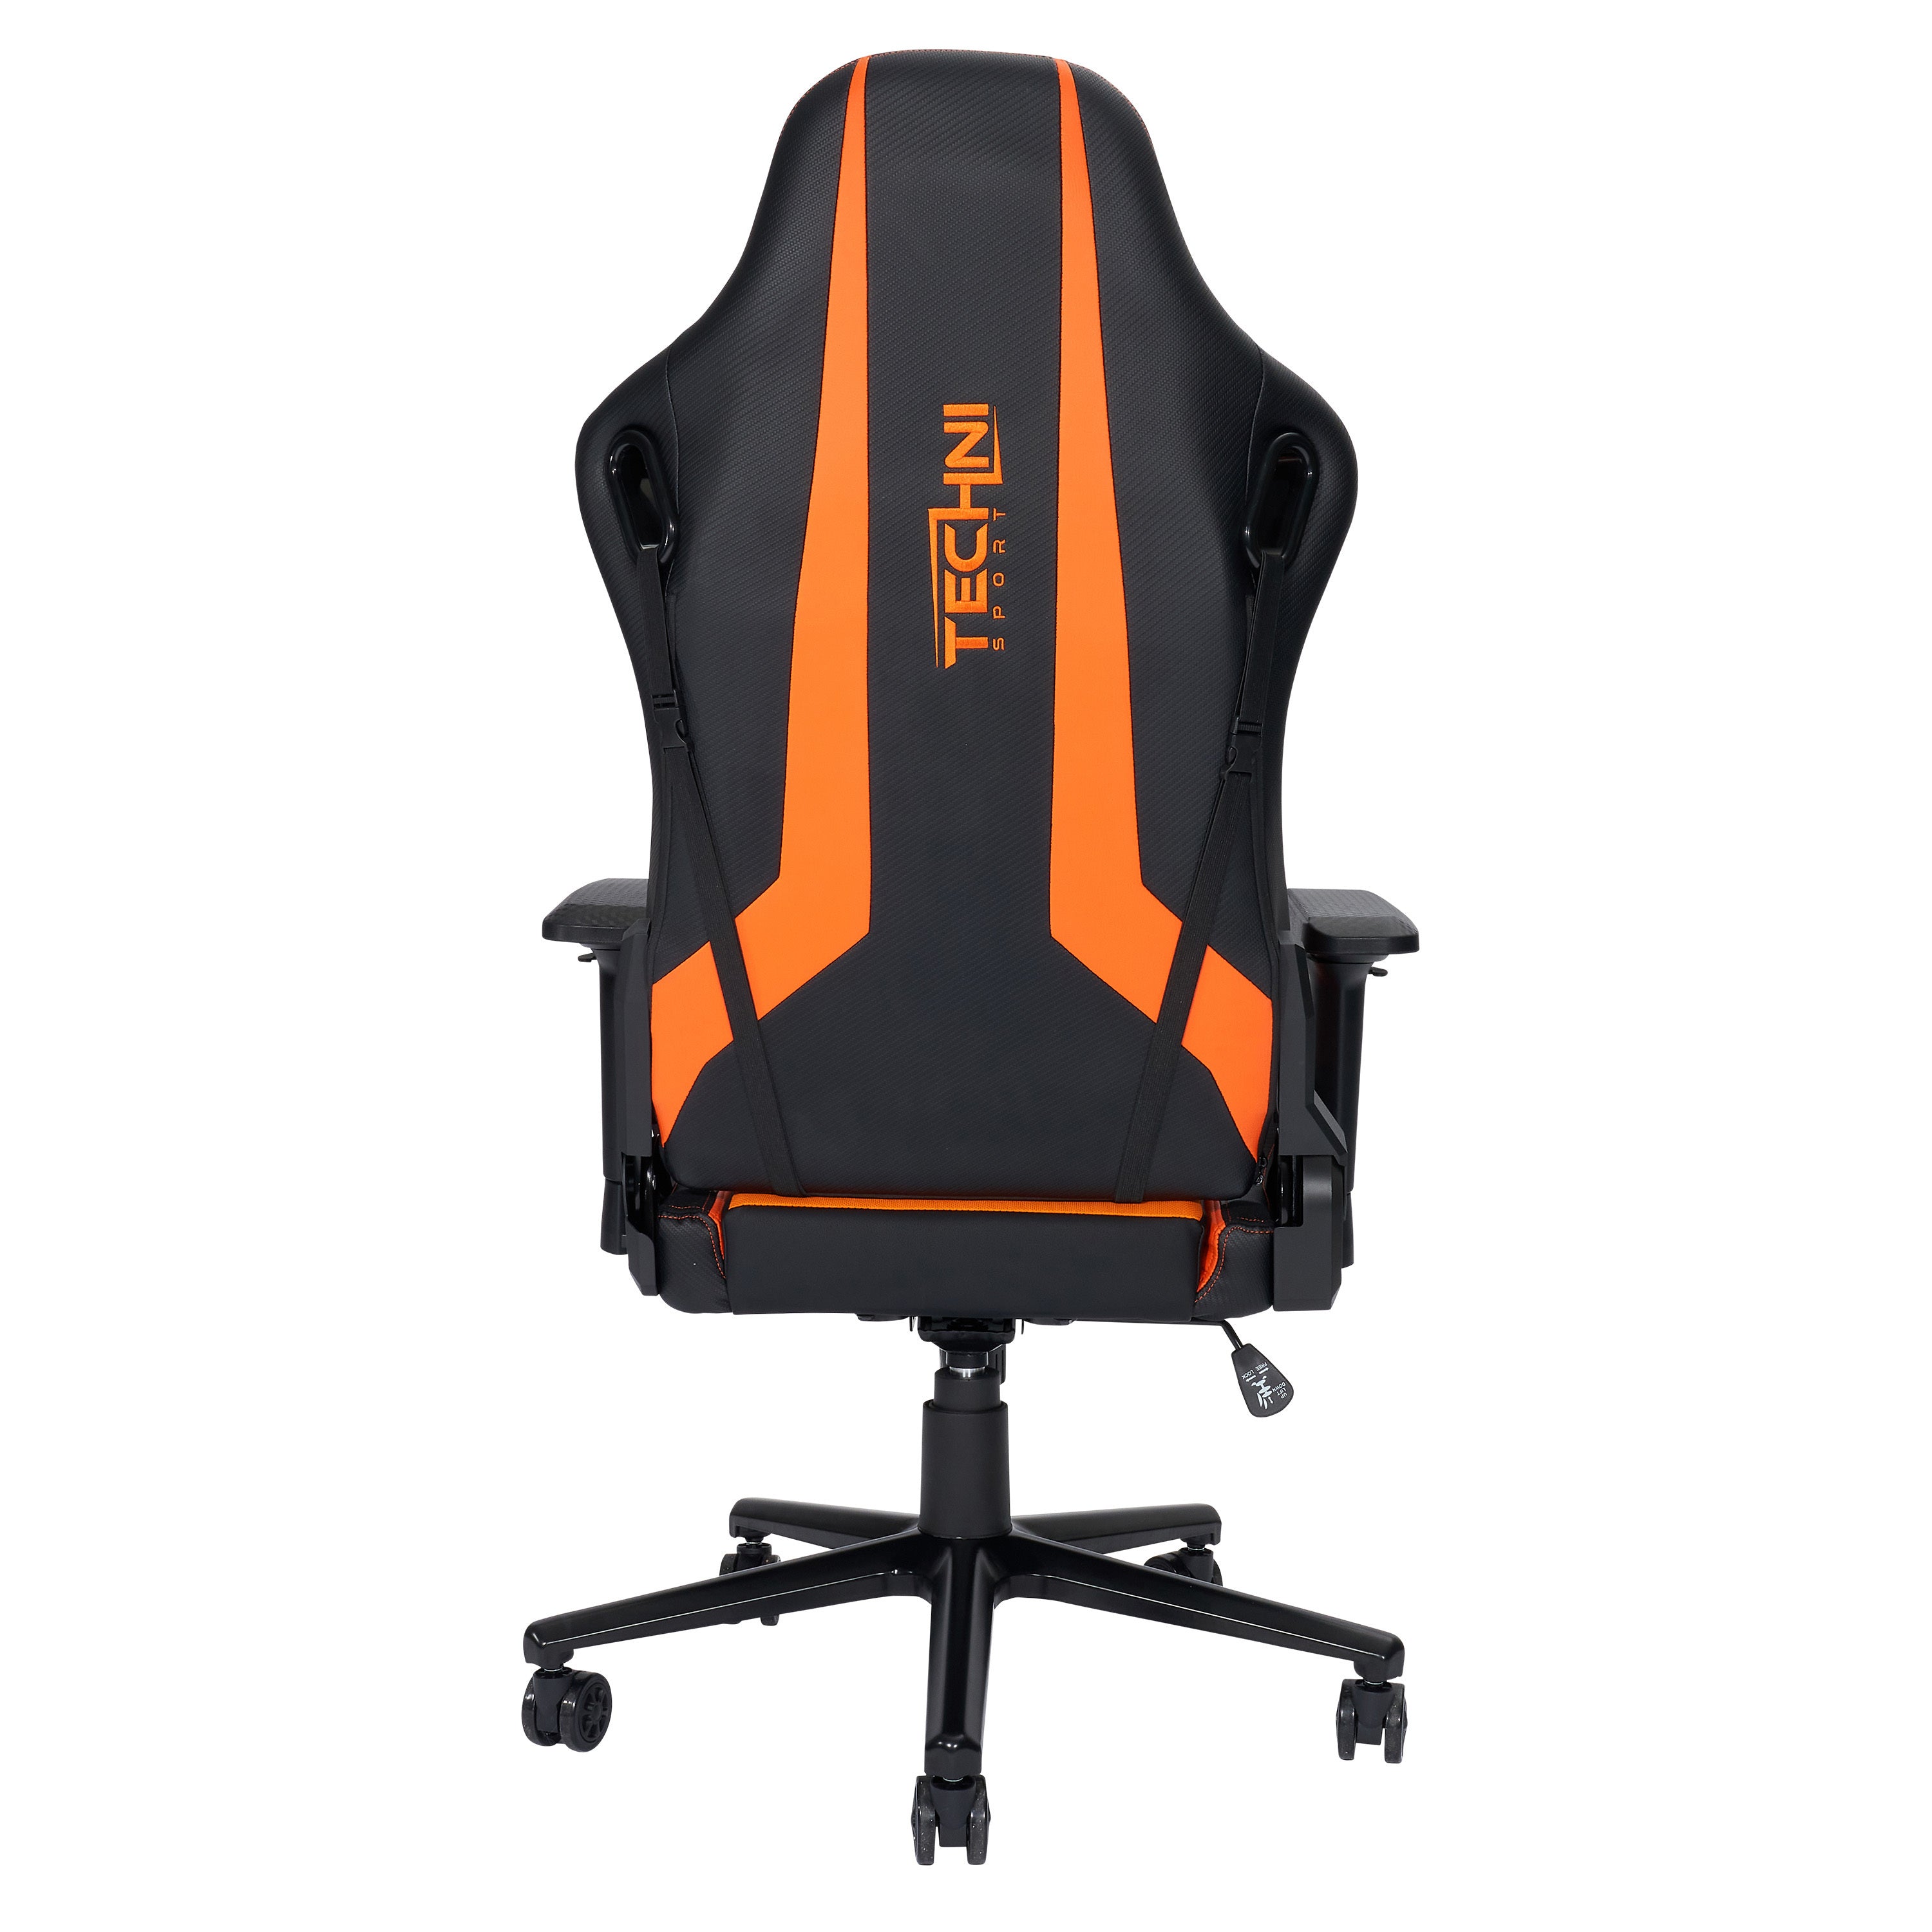 Techni Sport TS-84 Ergonomic High Back Racing Style Gaming Chair (Orange)